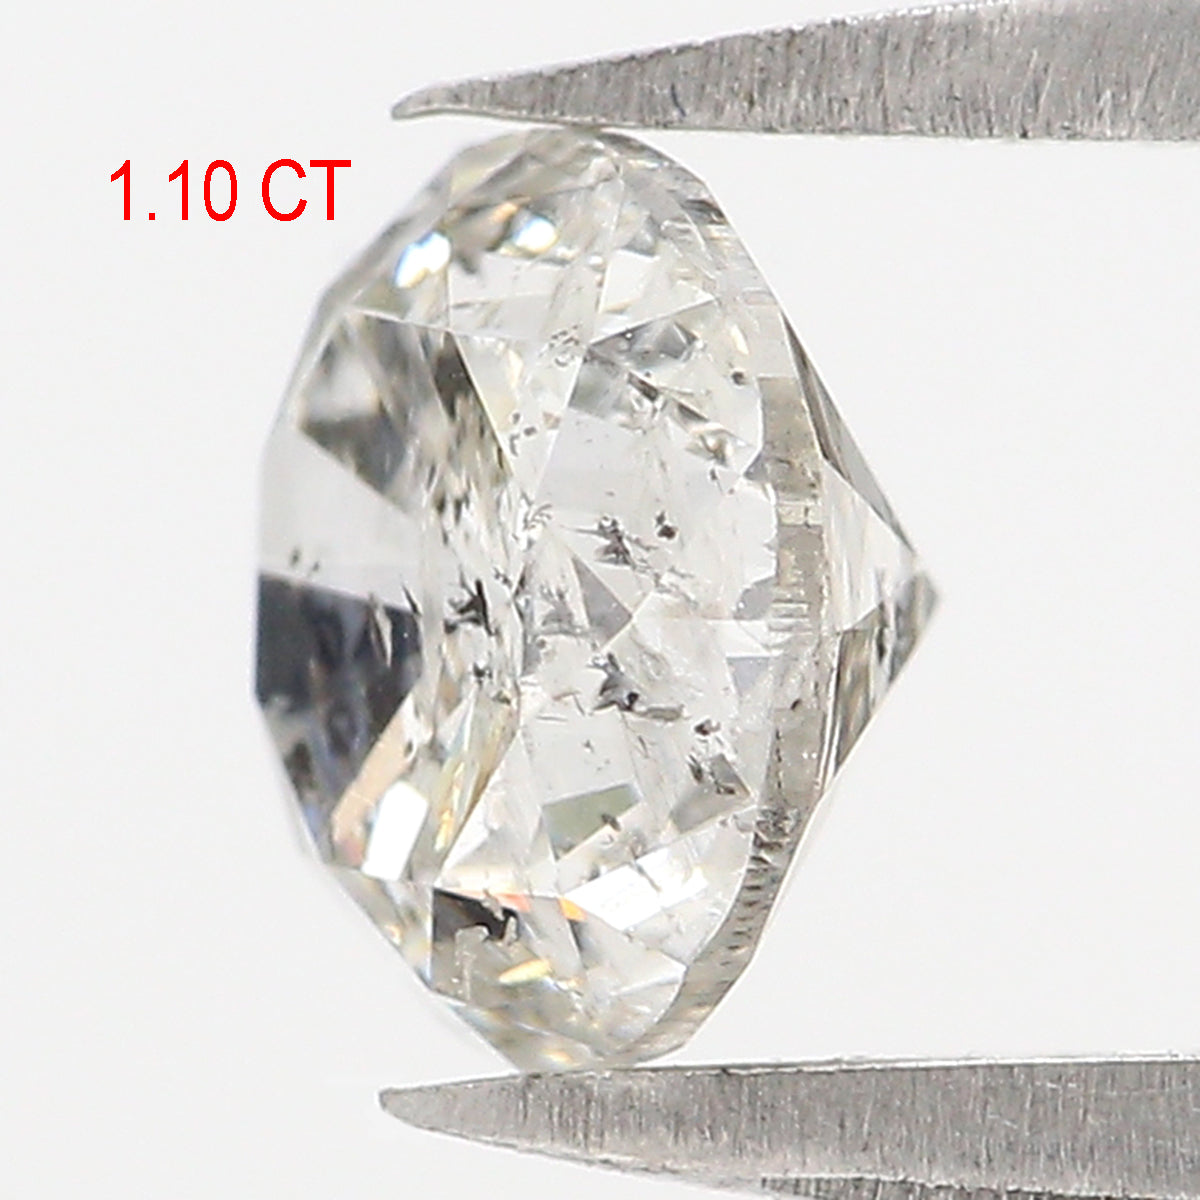 1.10 Ct Natural Loose Round Shape Diamond White - G Color Round Cut Diamond 6.25 MM Natural Loose Diamond Round Brilliant Cut Diamond QL2674